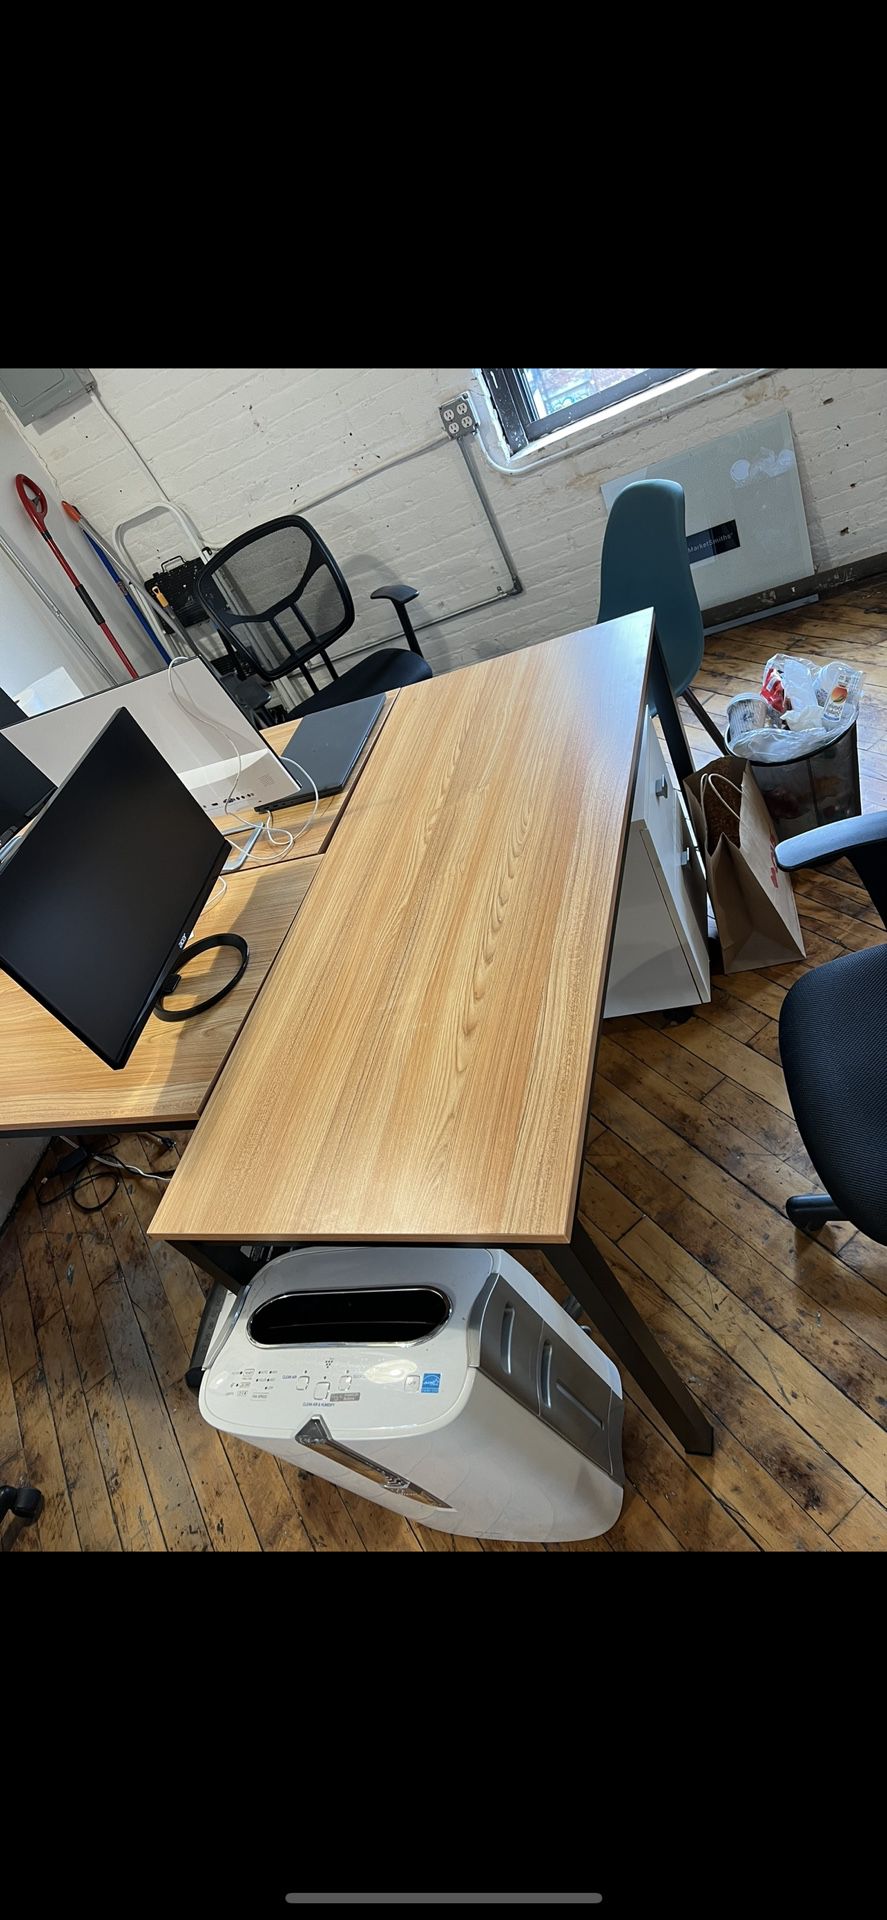 Office Desks (11)